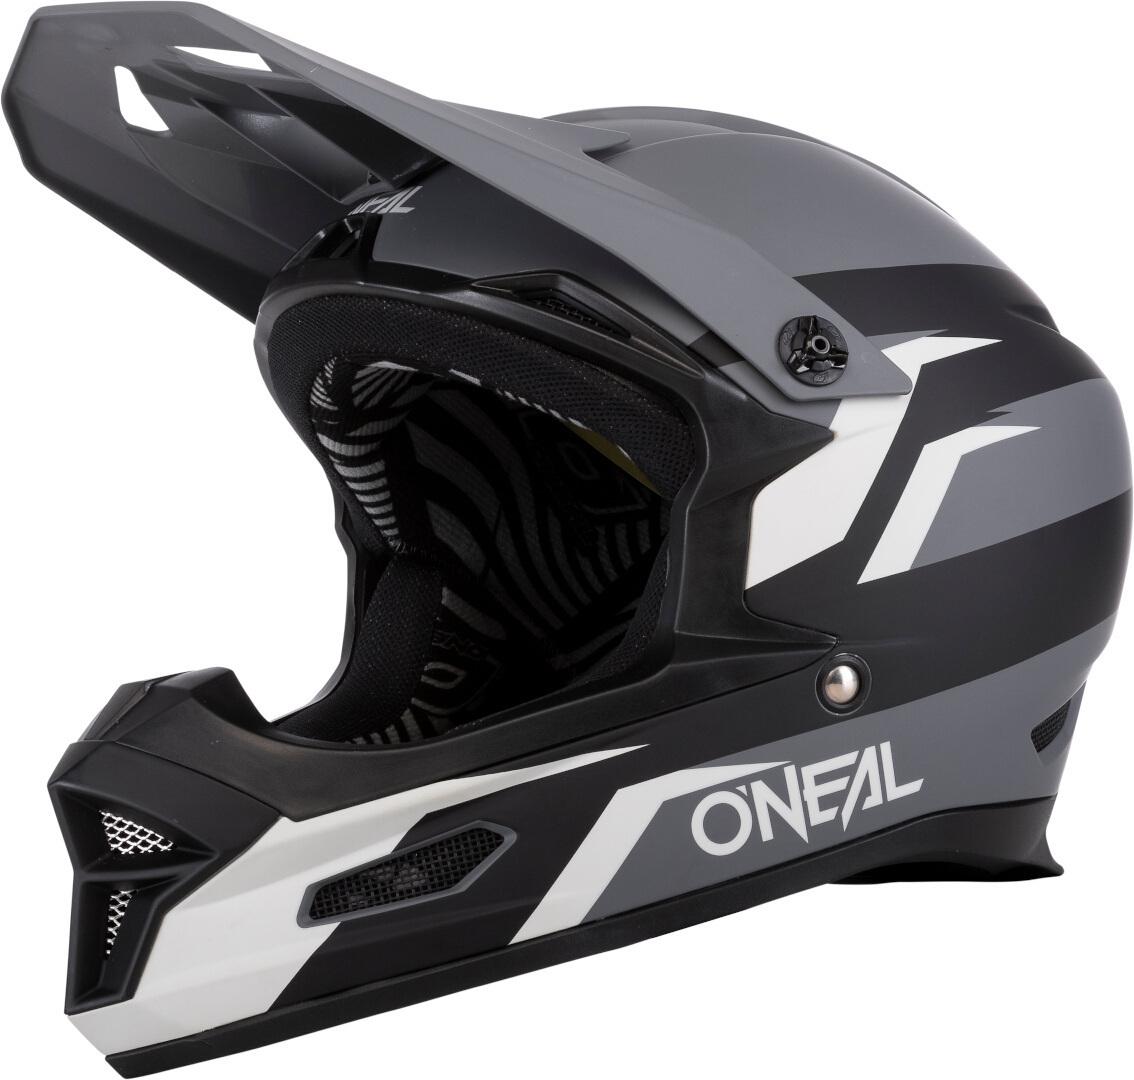 Oneal Fury Stage Downhill Helm, schwarz-grau, Größe S